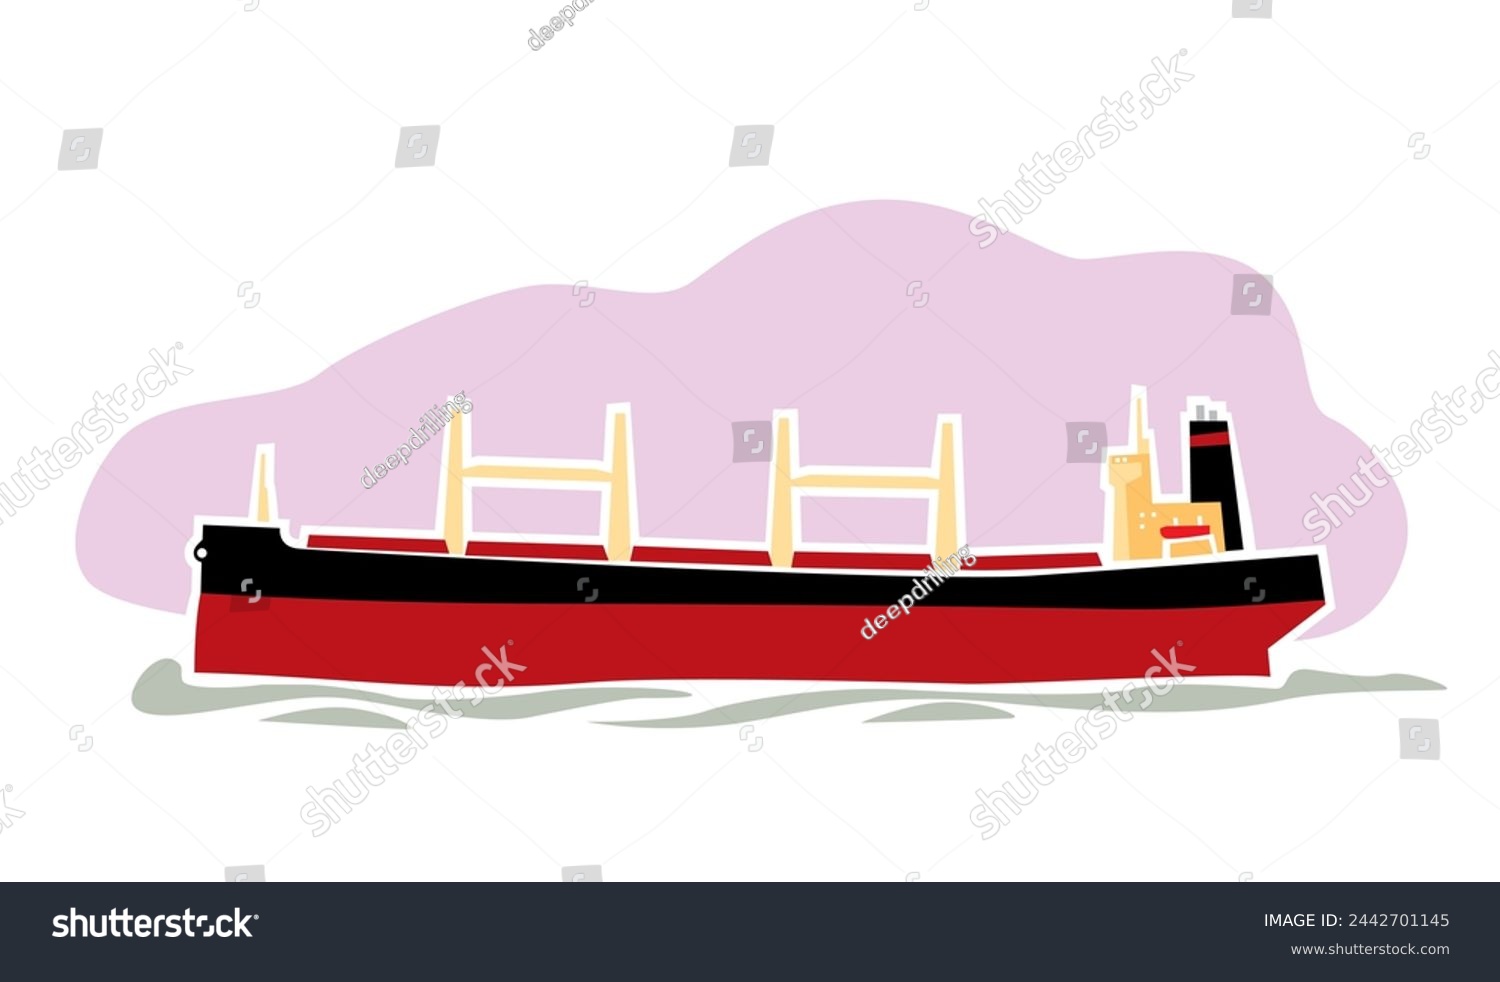 SVG of Cargo ships. Geared bulk carrier. Bulker. Sea delivery. Vector image for prints, poster and illustrations. svg